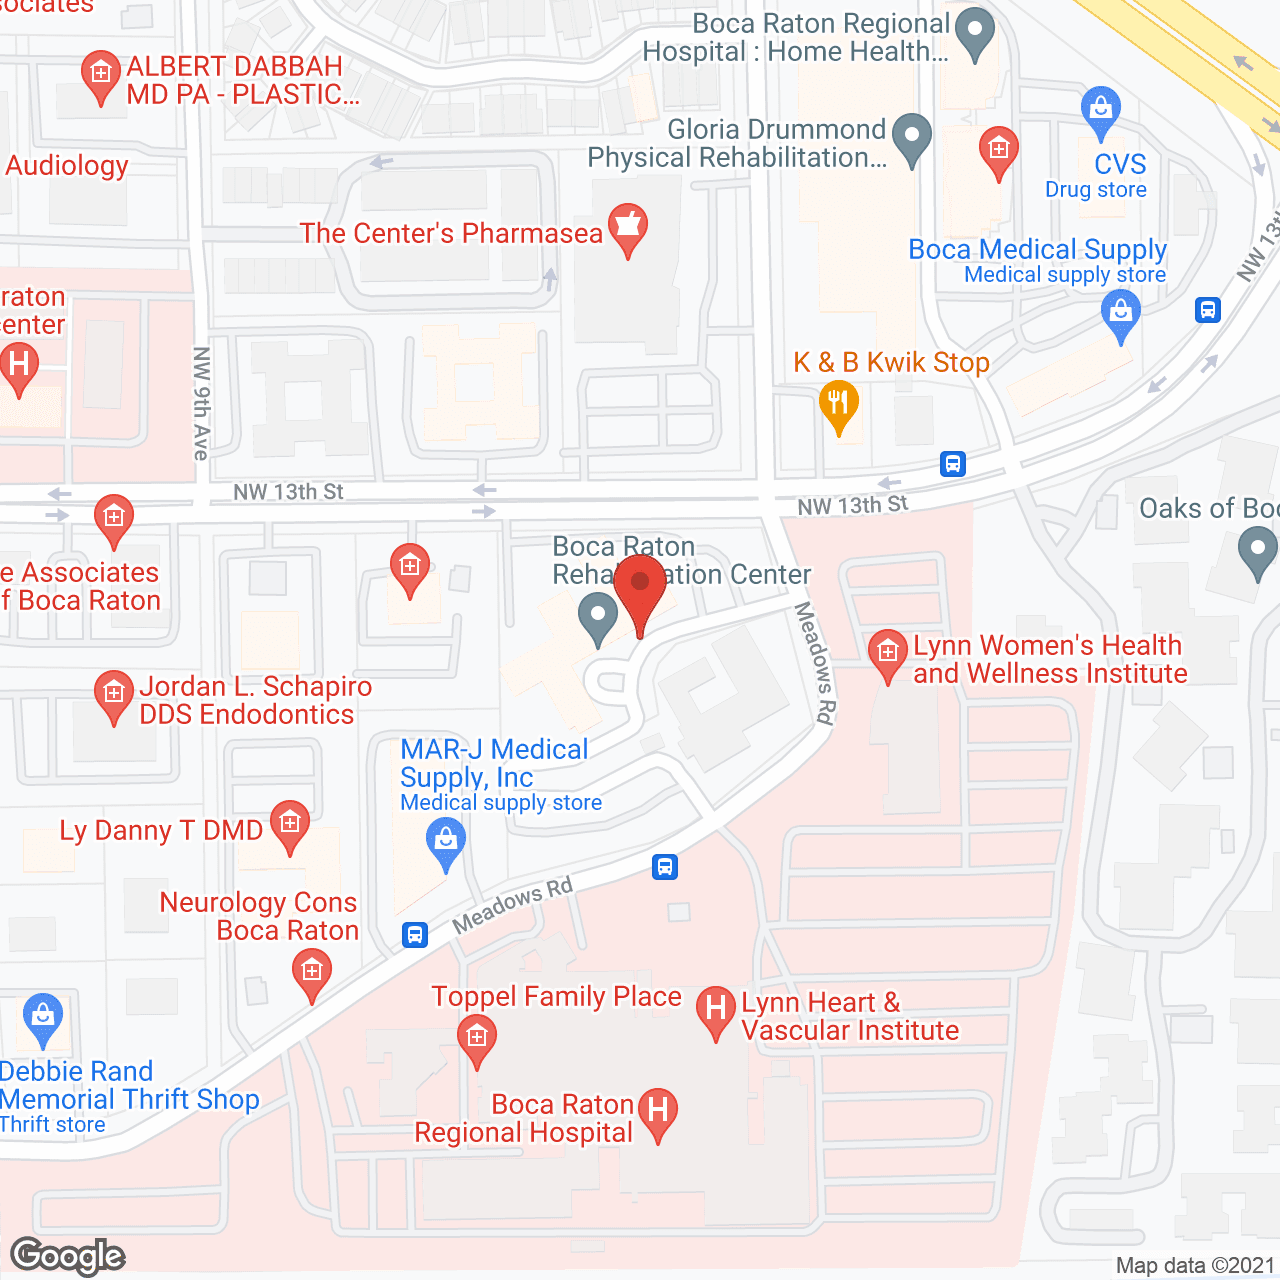 Boca Raton Rehab Ctr in google map